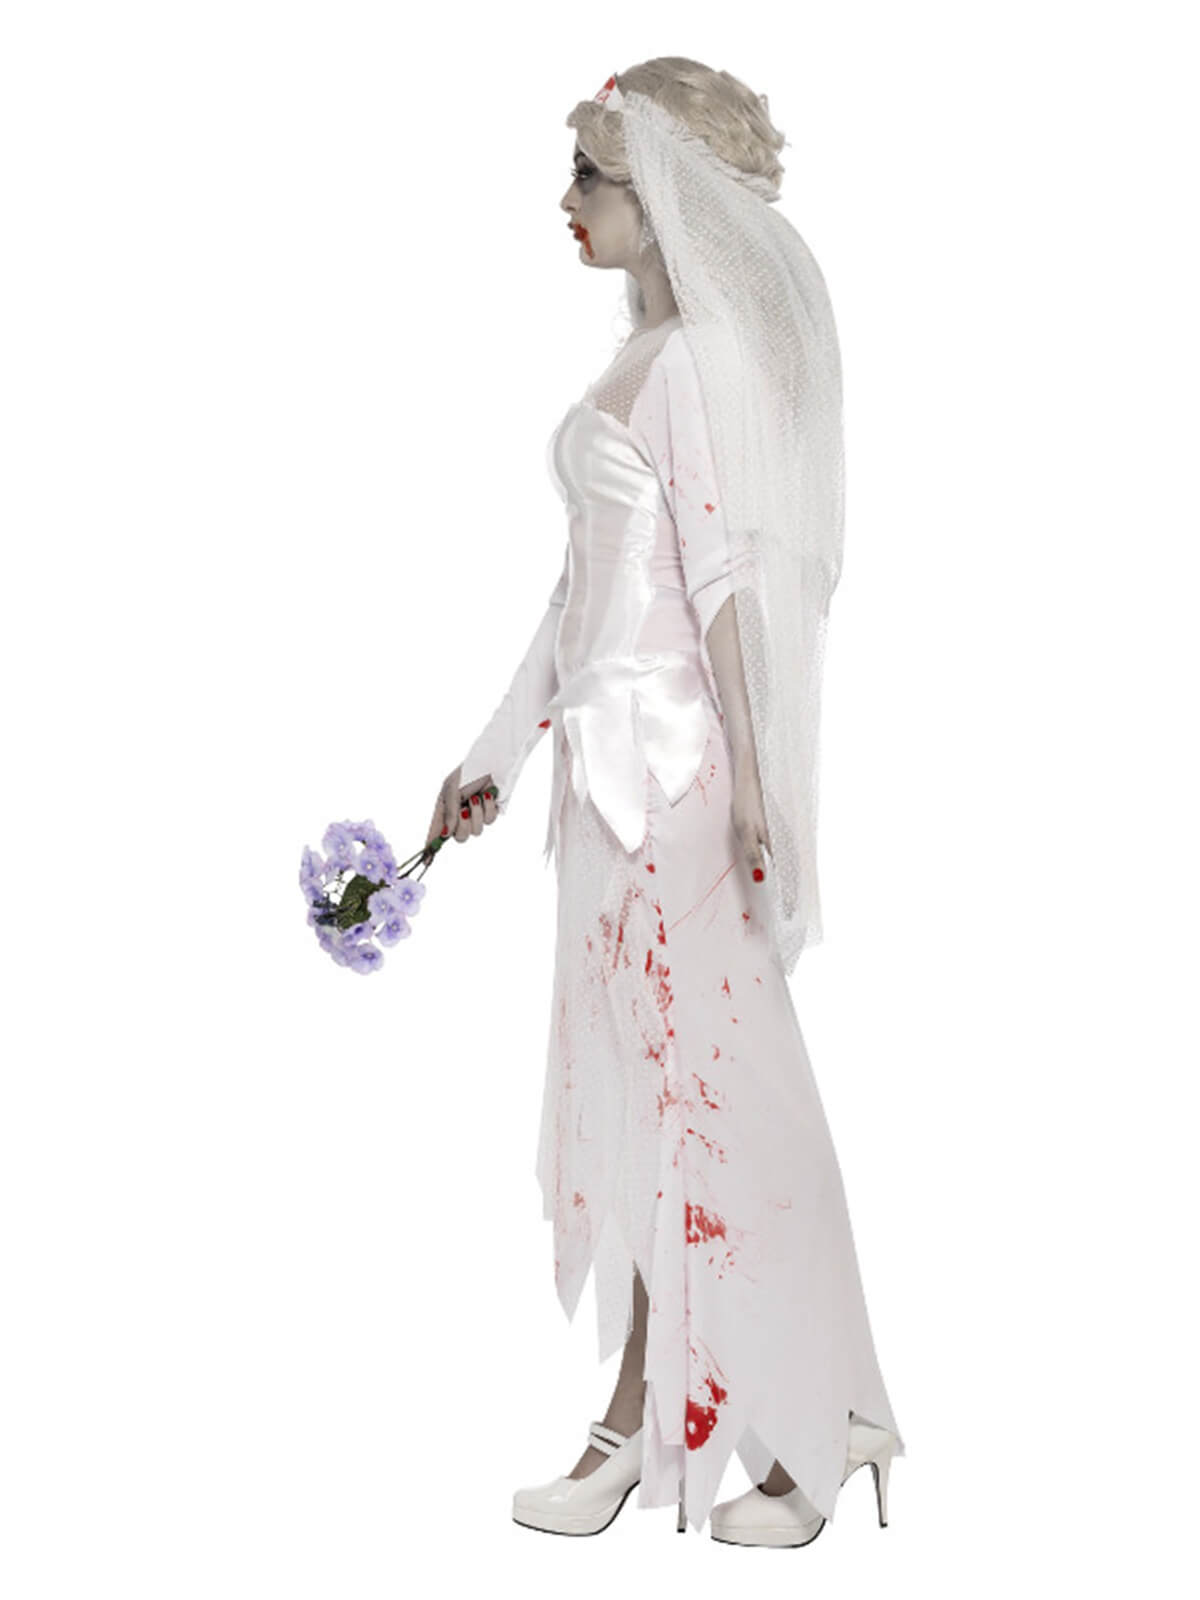 spooky zombie bride adult costume